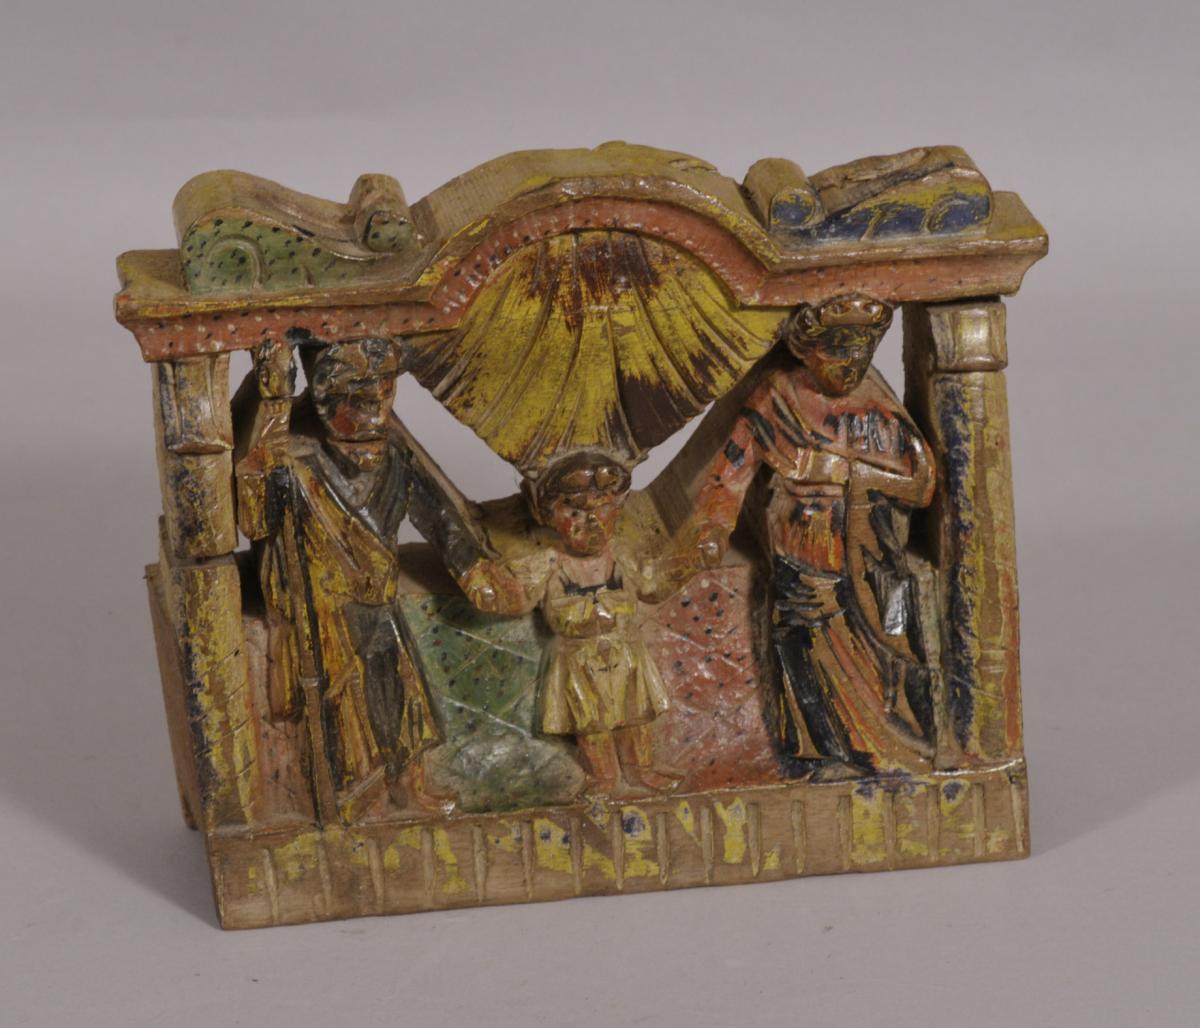 S/4410 Antique Oak Religious Carving with Polychrome Decoration